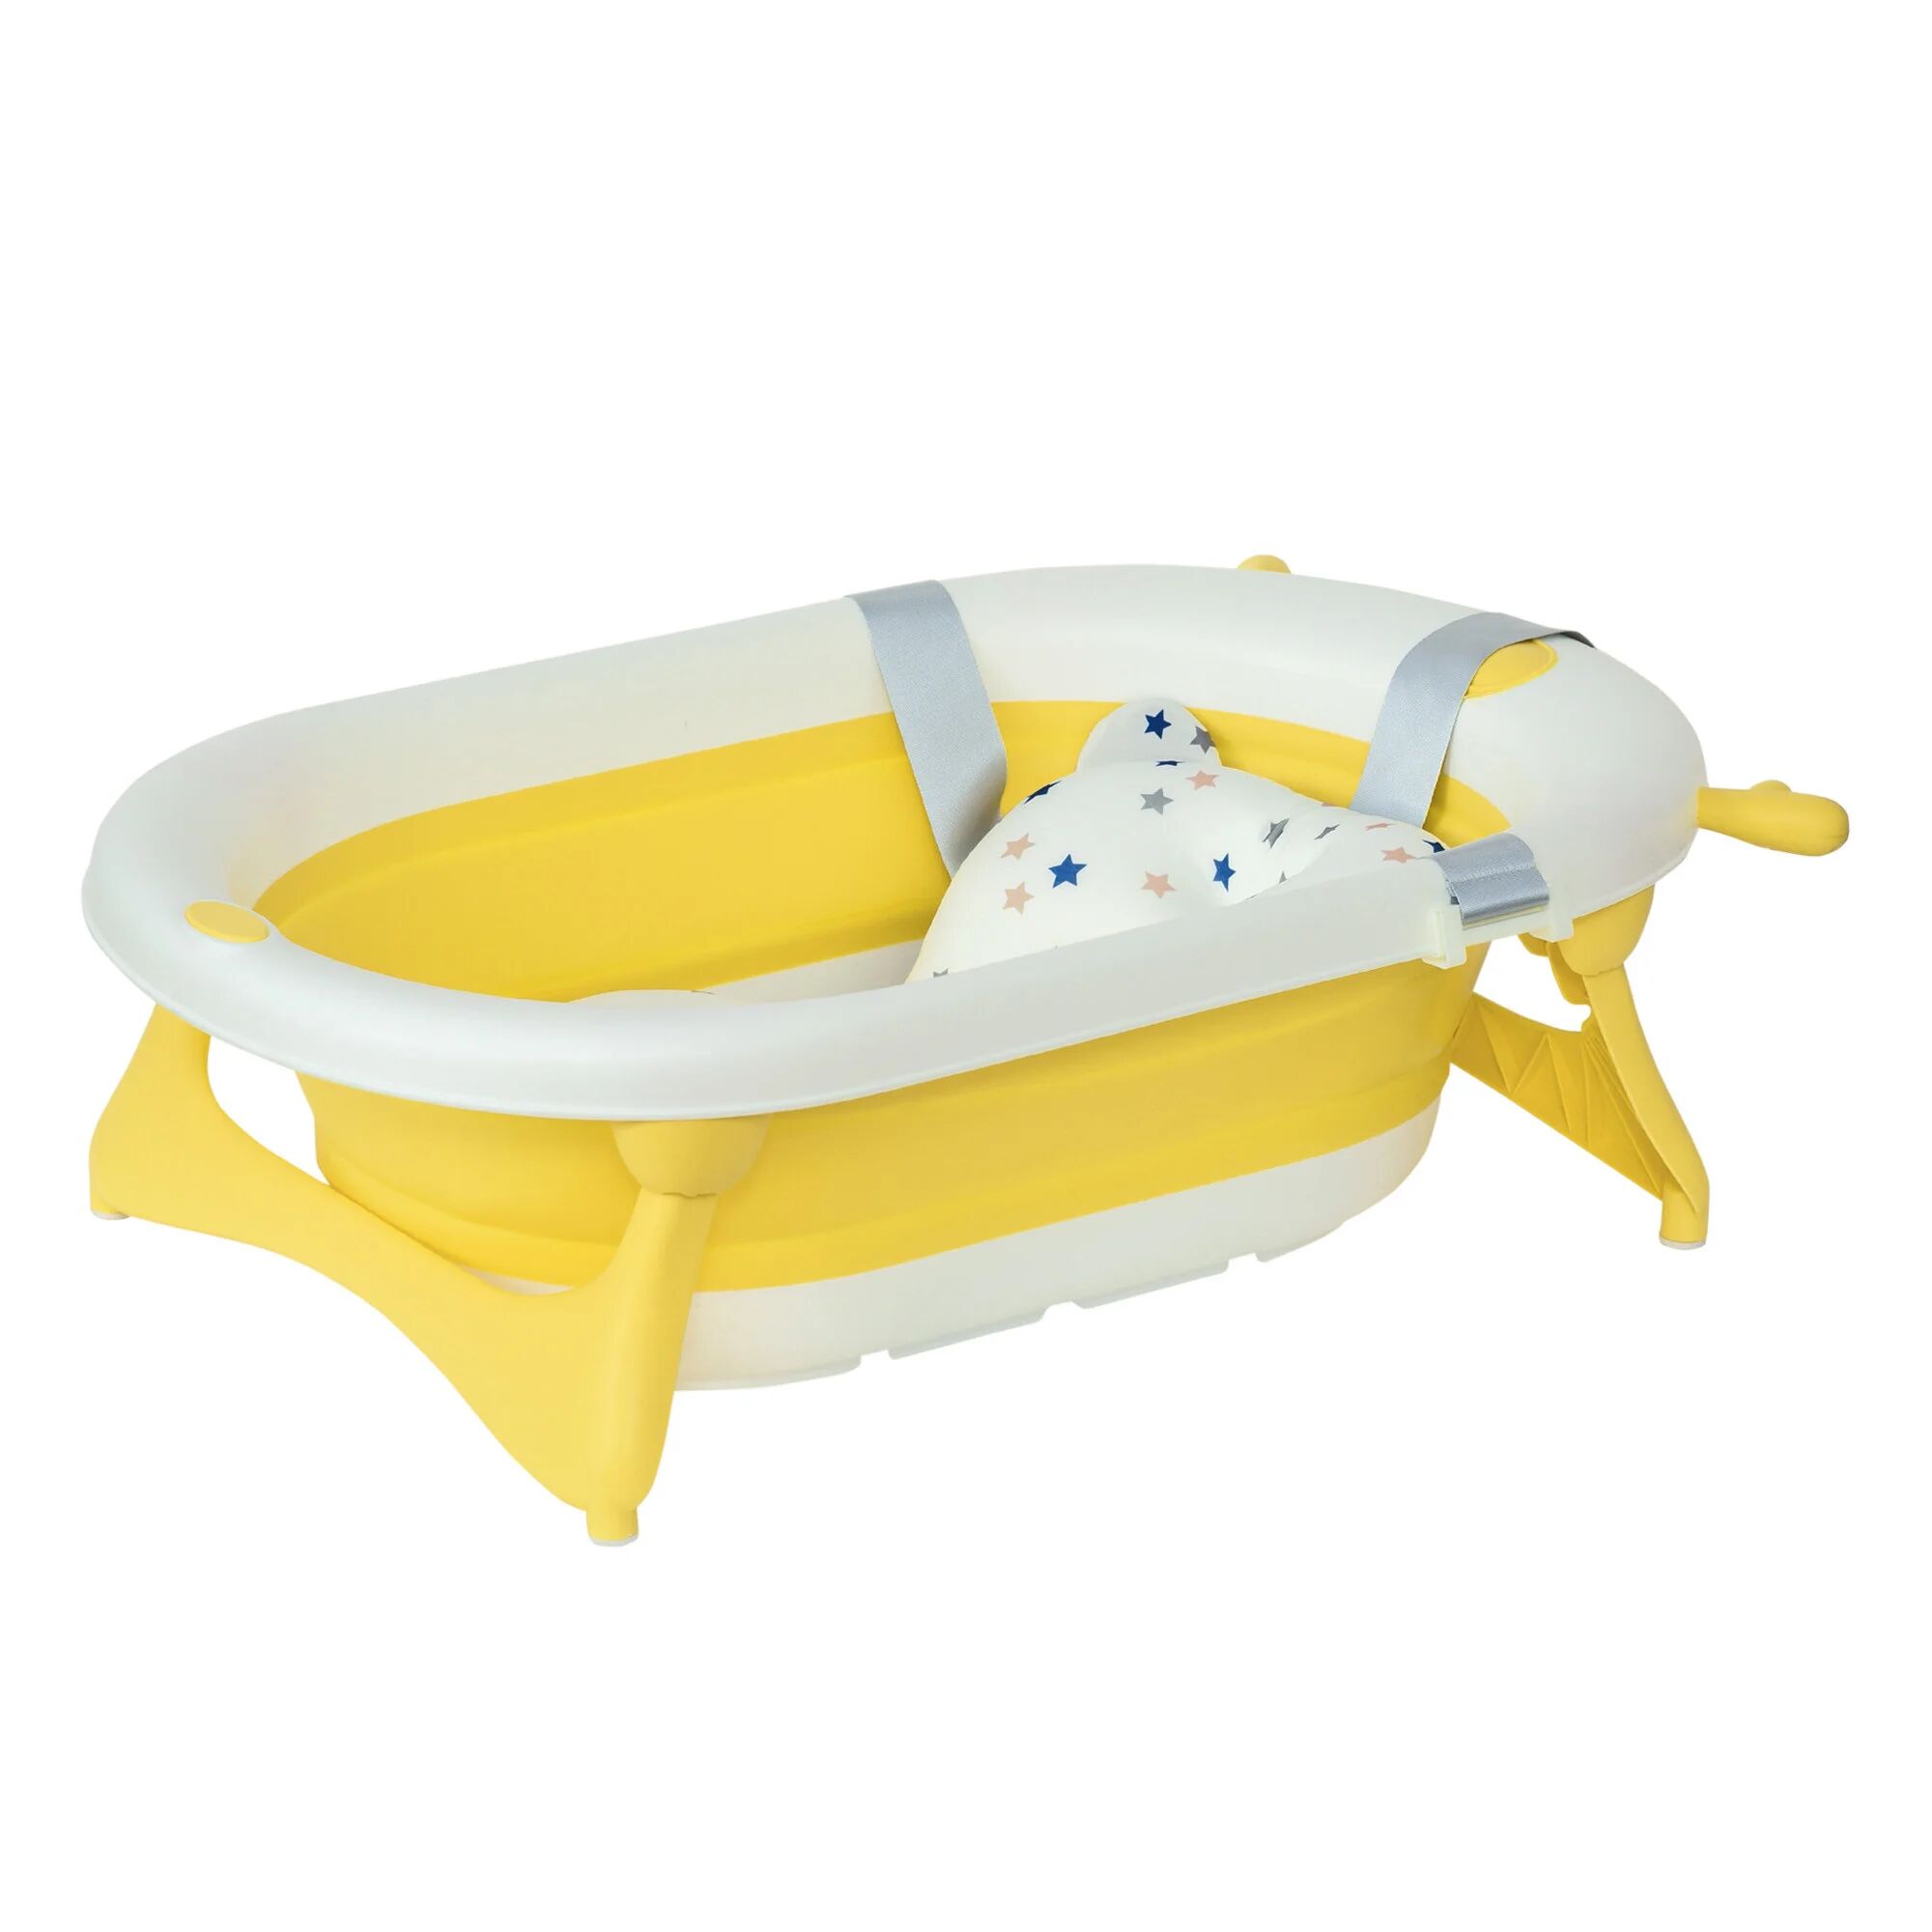 HOMCOM Bañera para bebé plegable con cojín homcom 81.5x50.5x23.5 cm amarillo